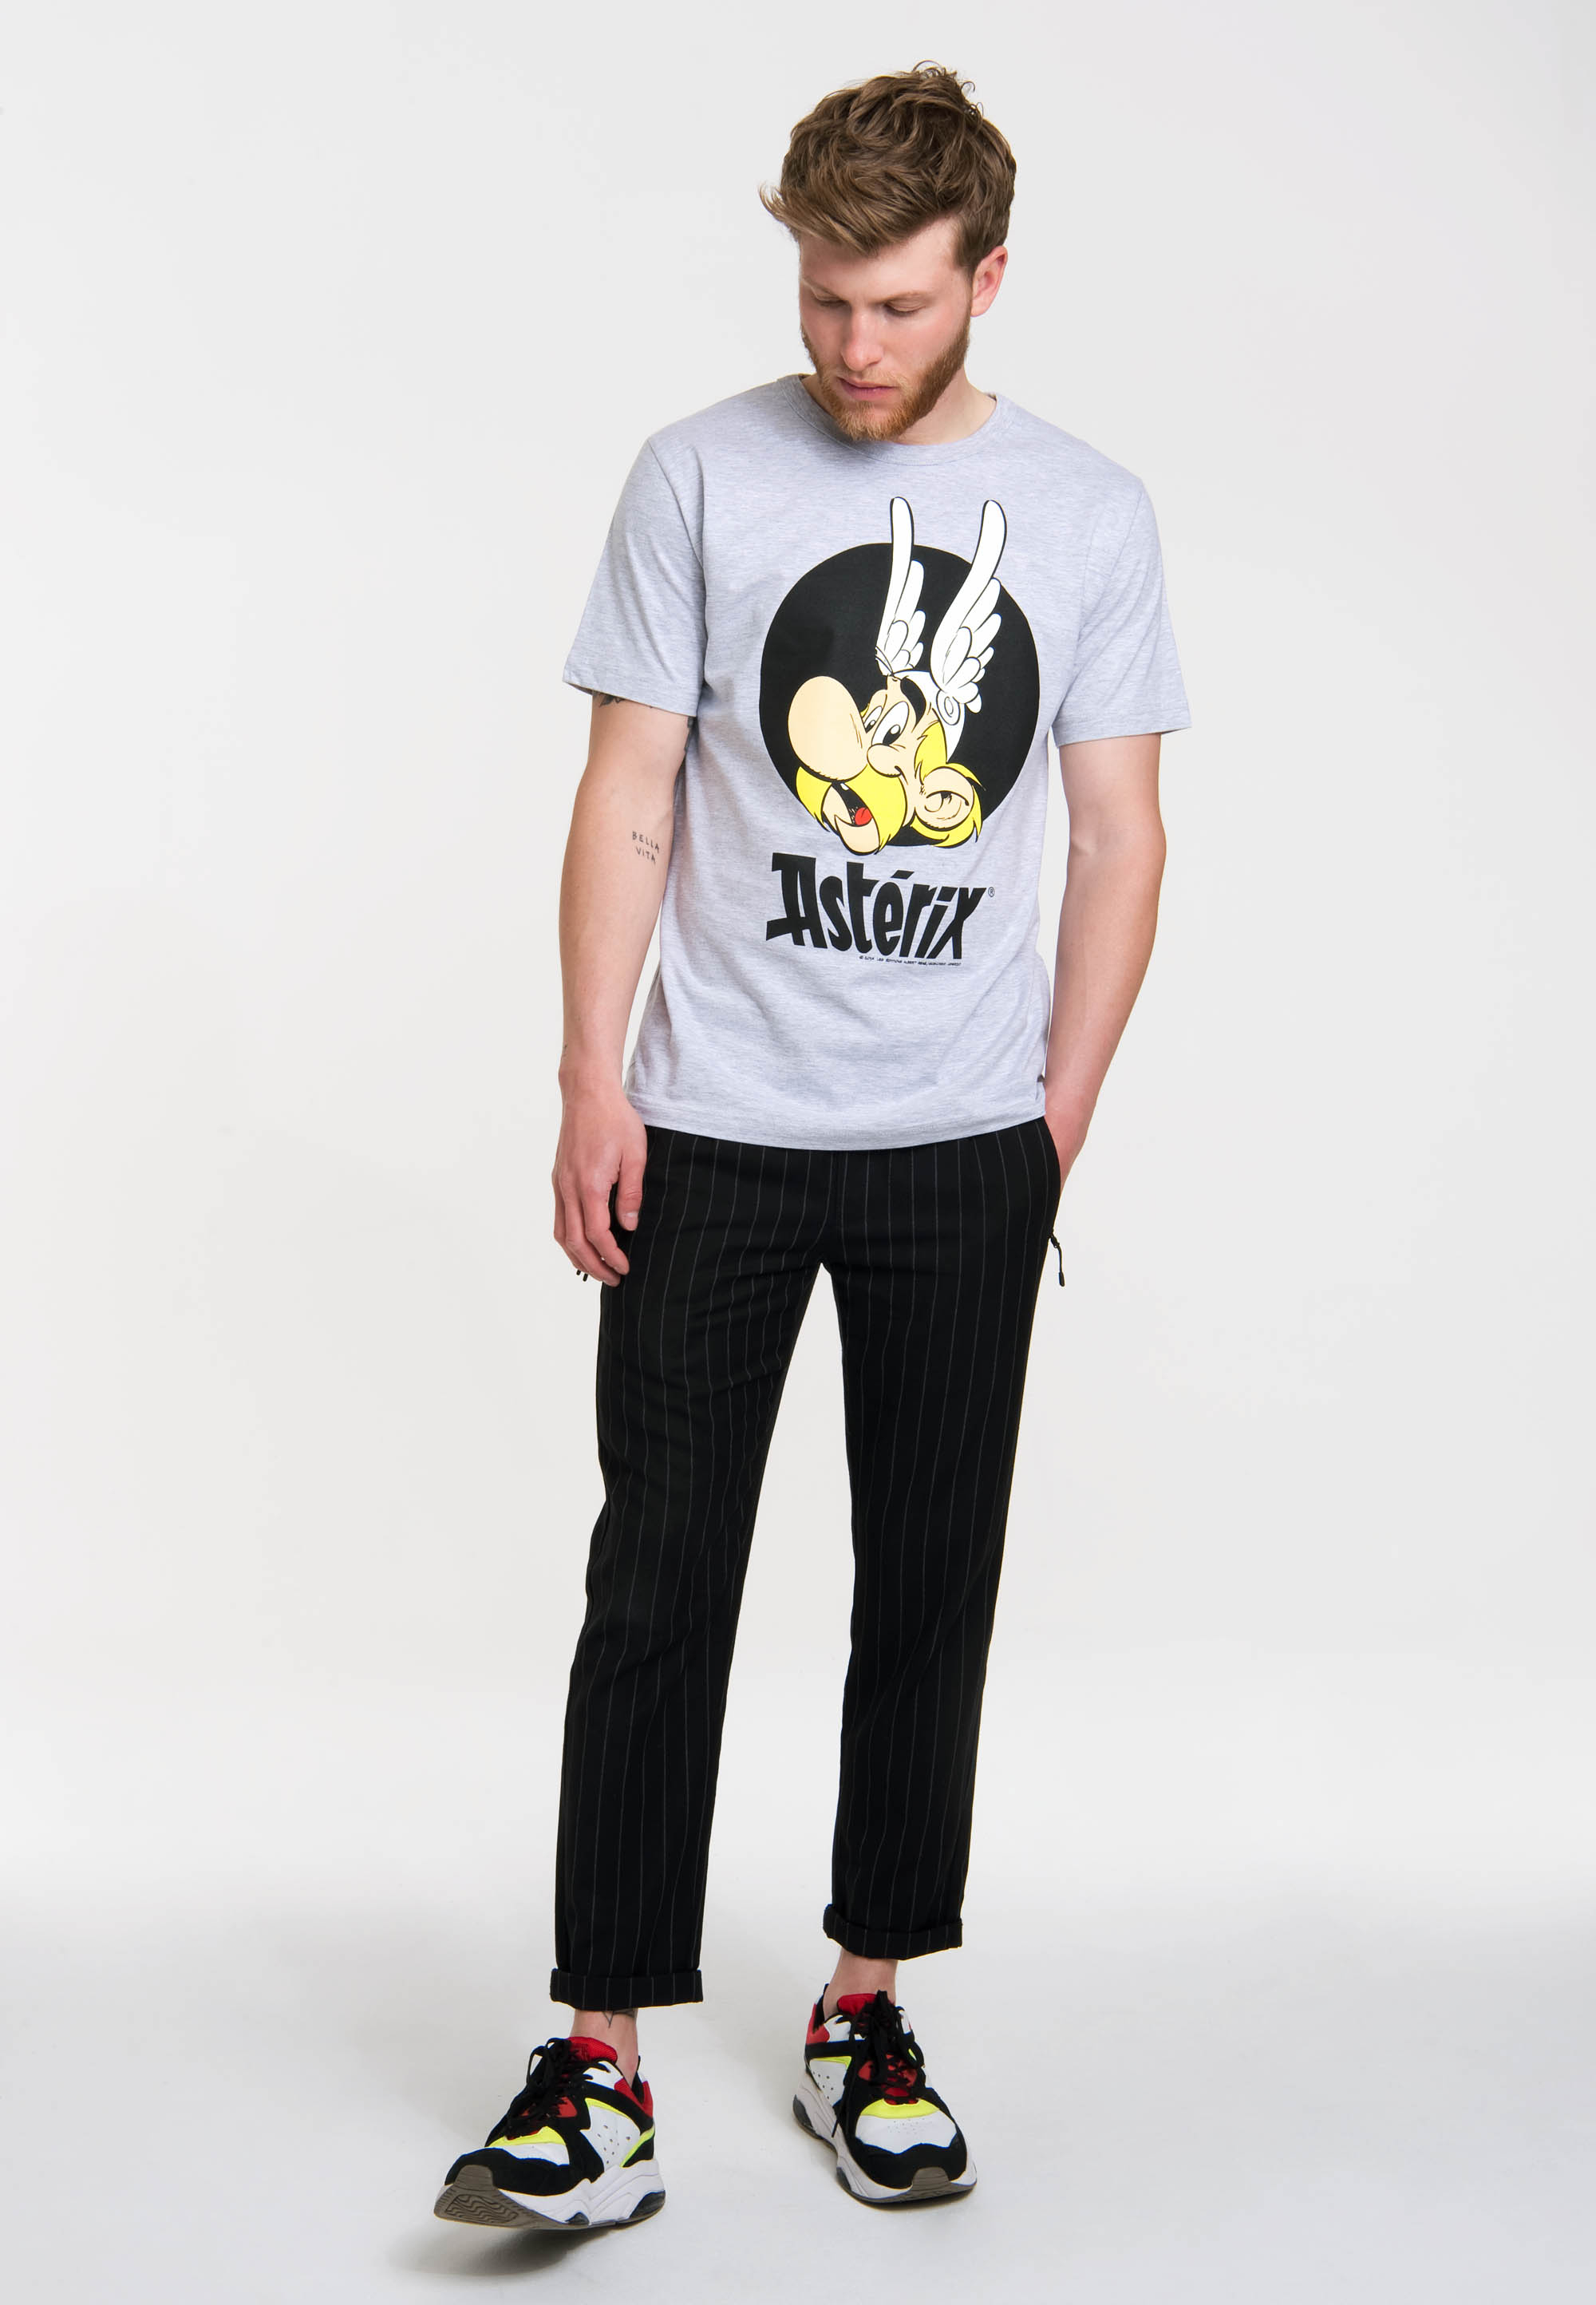 T-shirt 100% cotton Logoshirt® Asterix Portrait (Heather Gray) | eBay